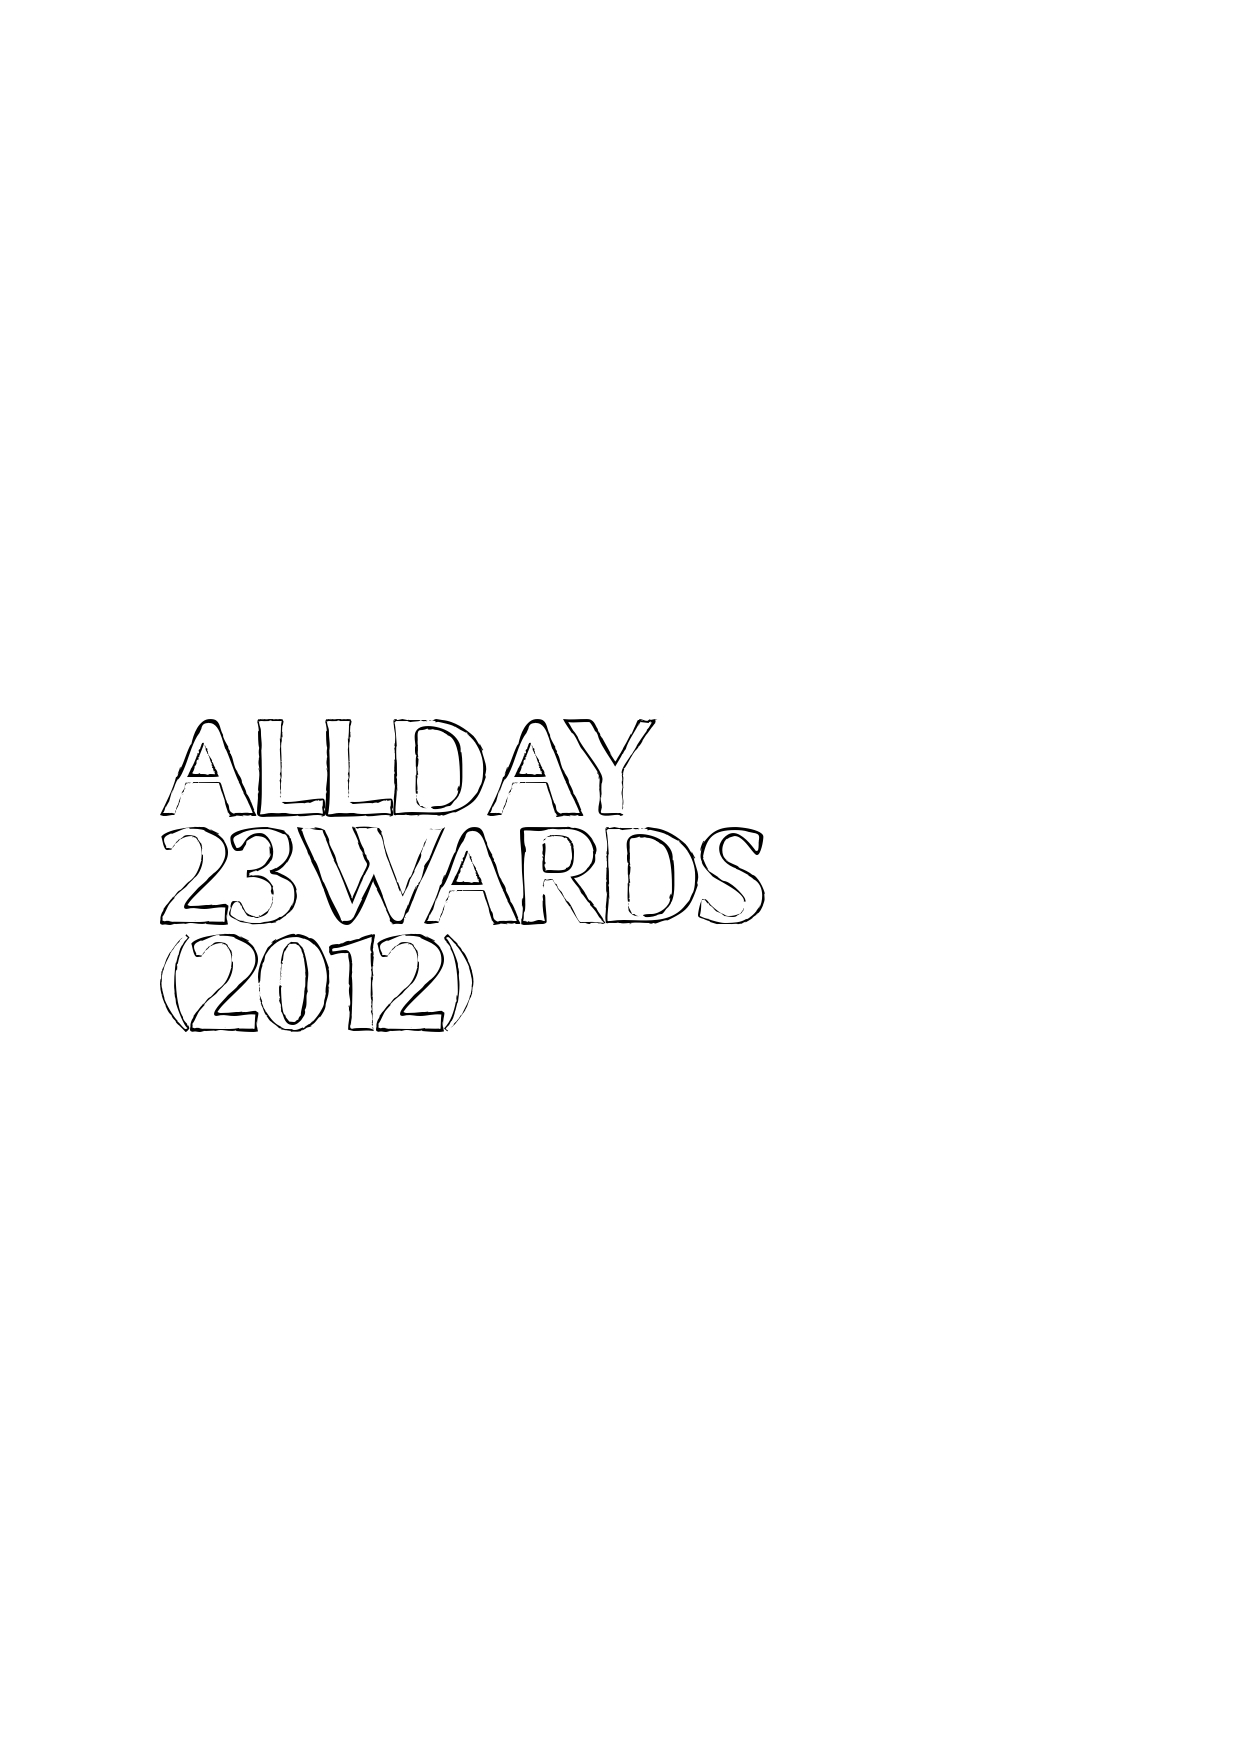 AllDay23wards(2012)